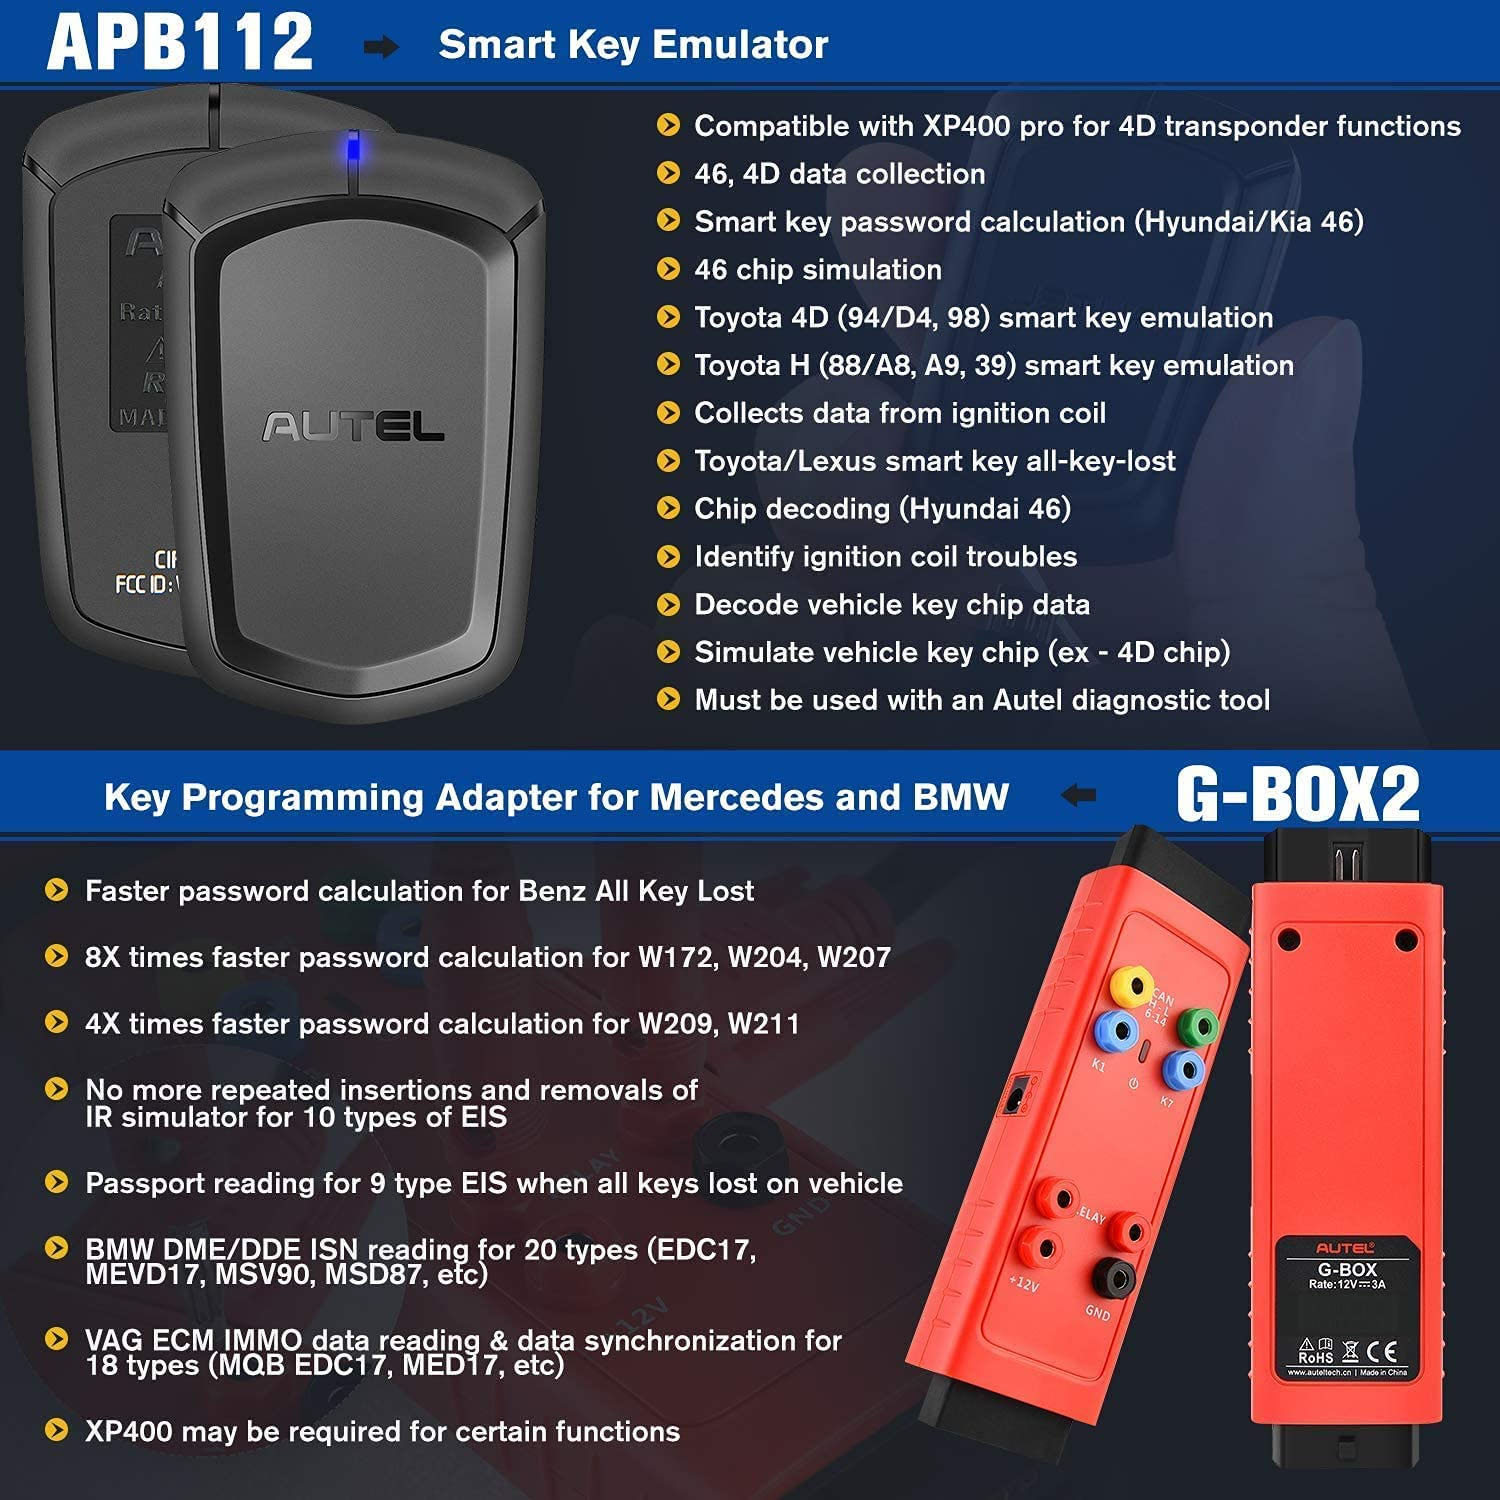  Autel APB112 with GBOX2